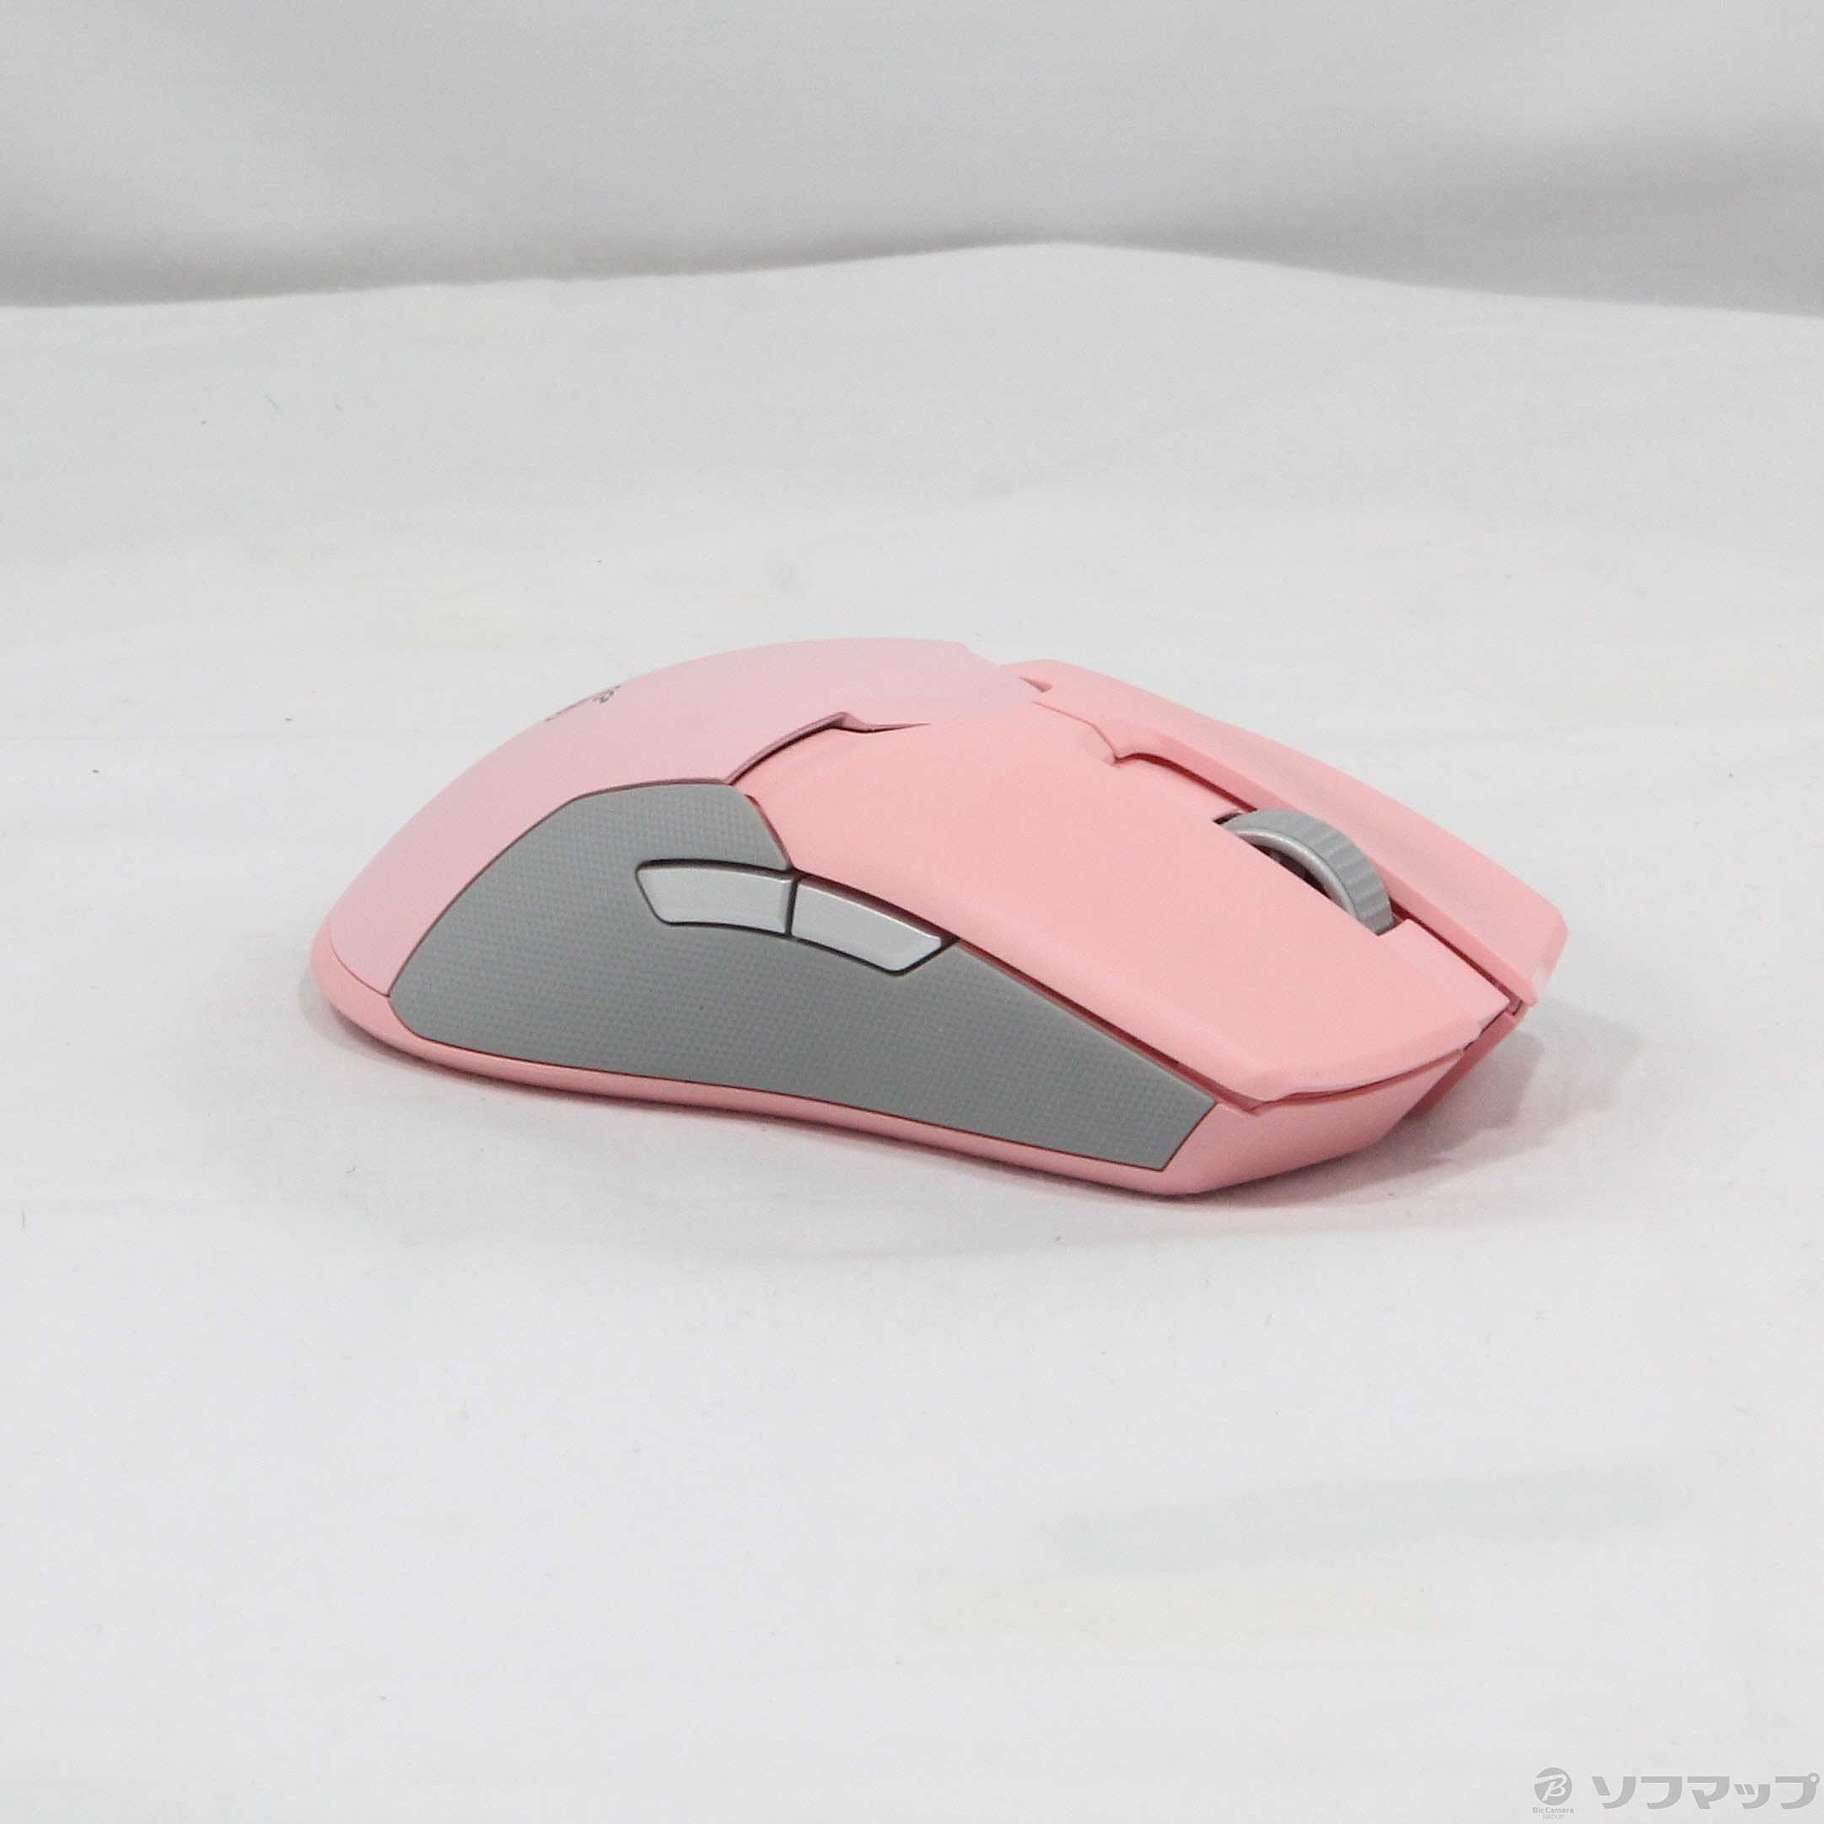 中古】〔展示品〕 Viper Ultimate RZ01-03050300-R3M1 Quartz Pink ...